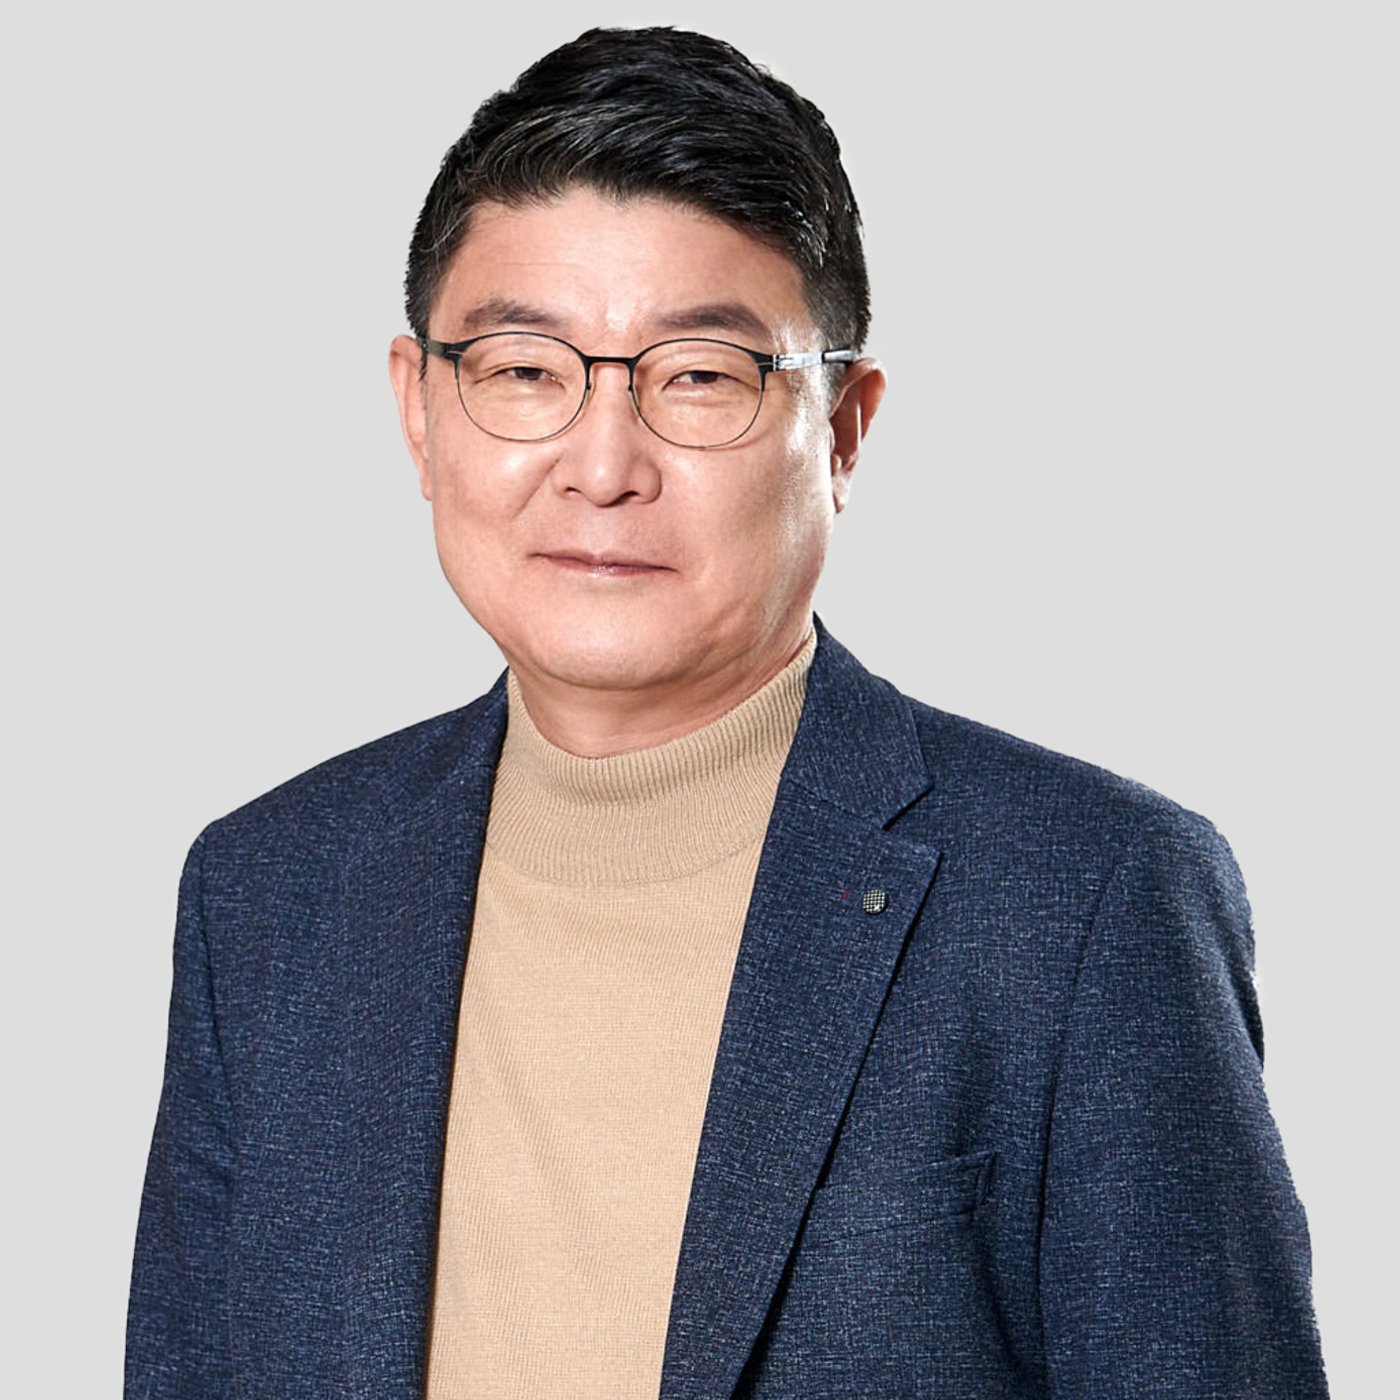 A headshot of Jubock Ryu, Managing Director of Kyndryl Korea